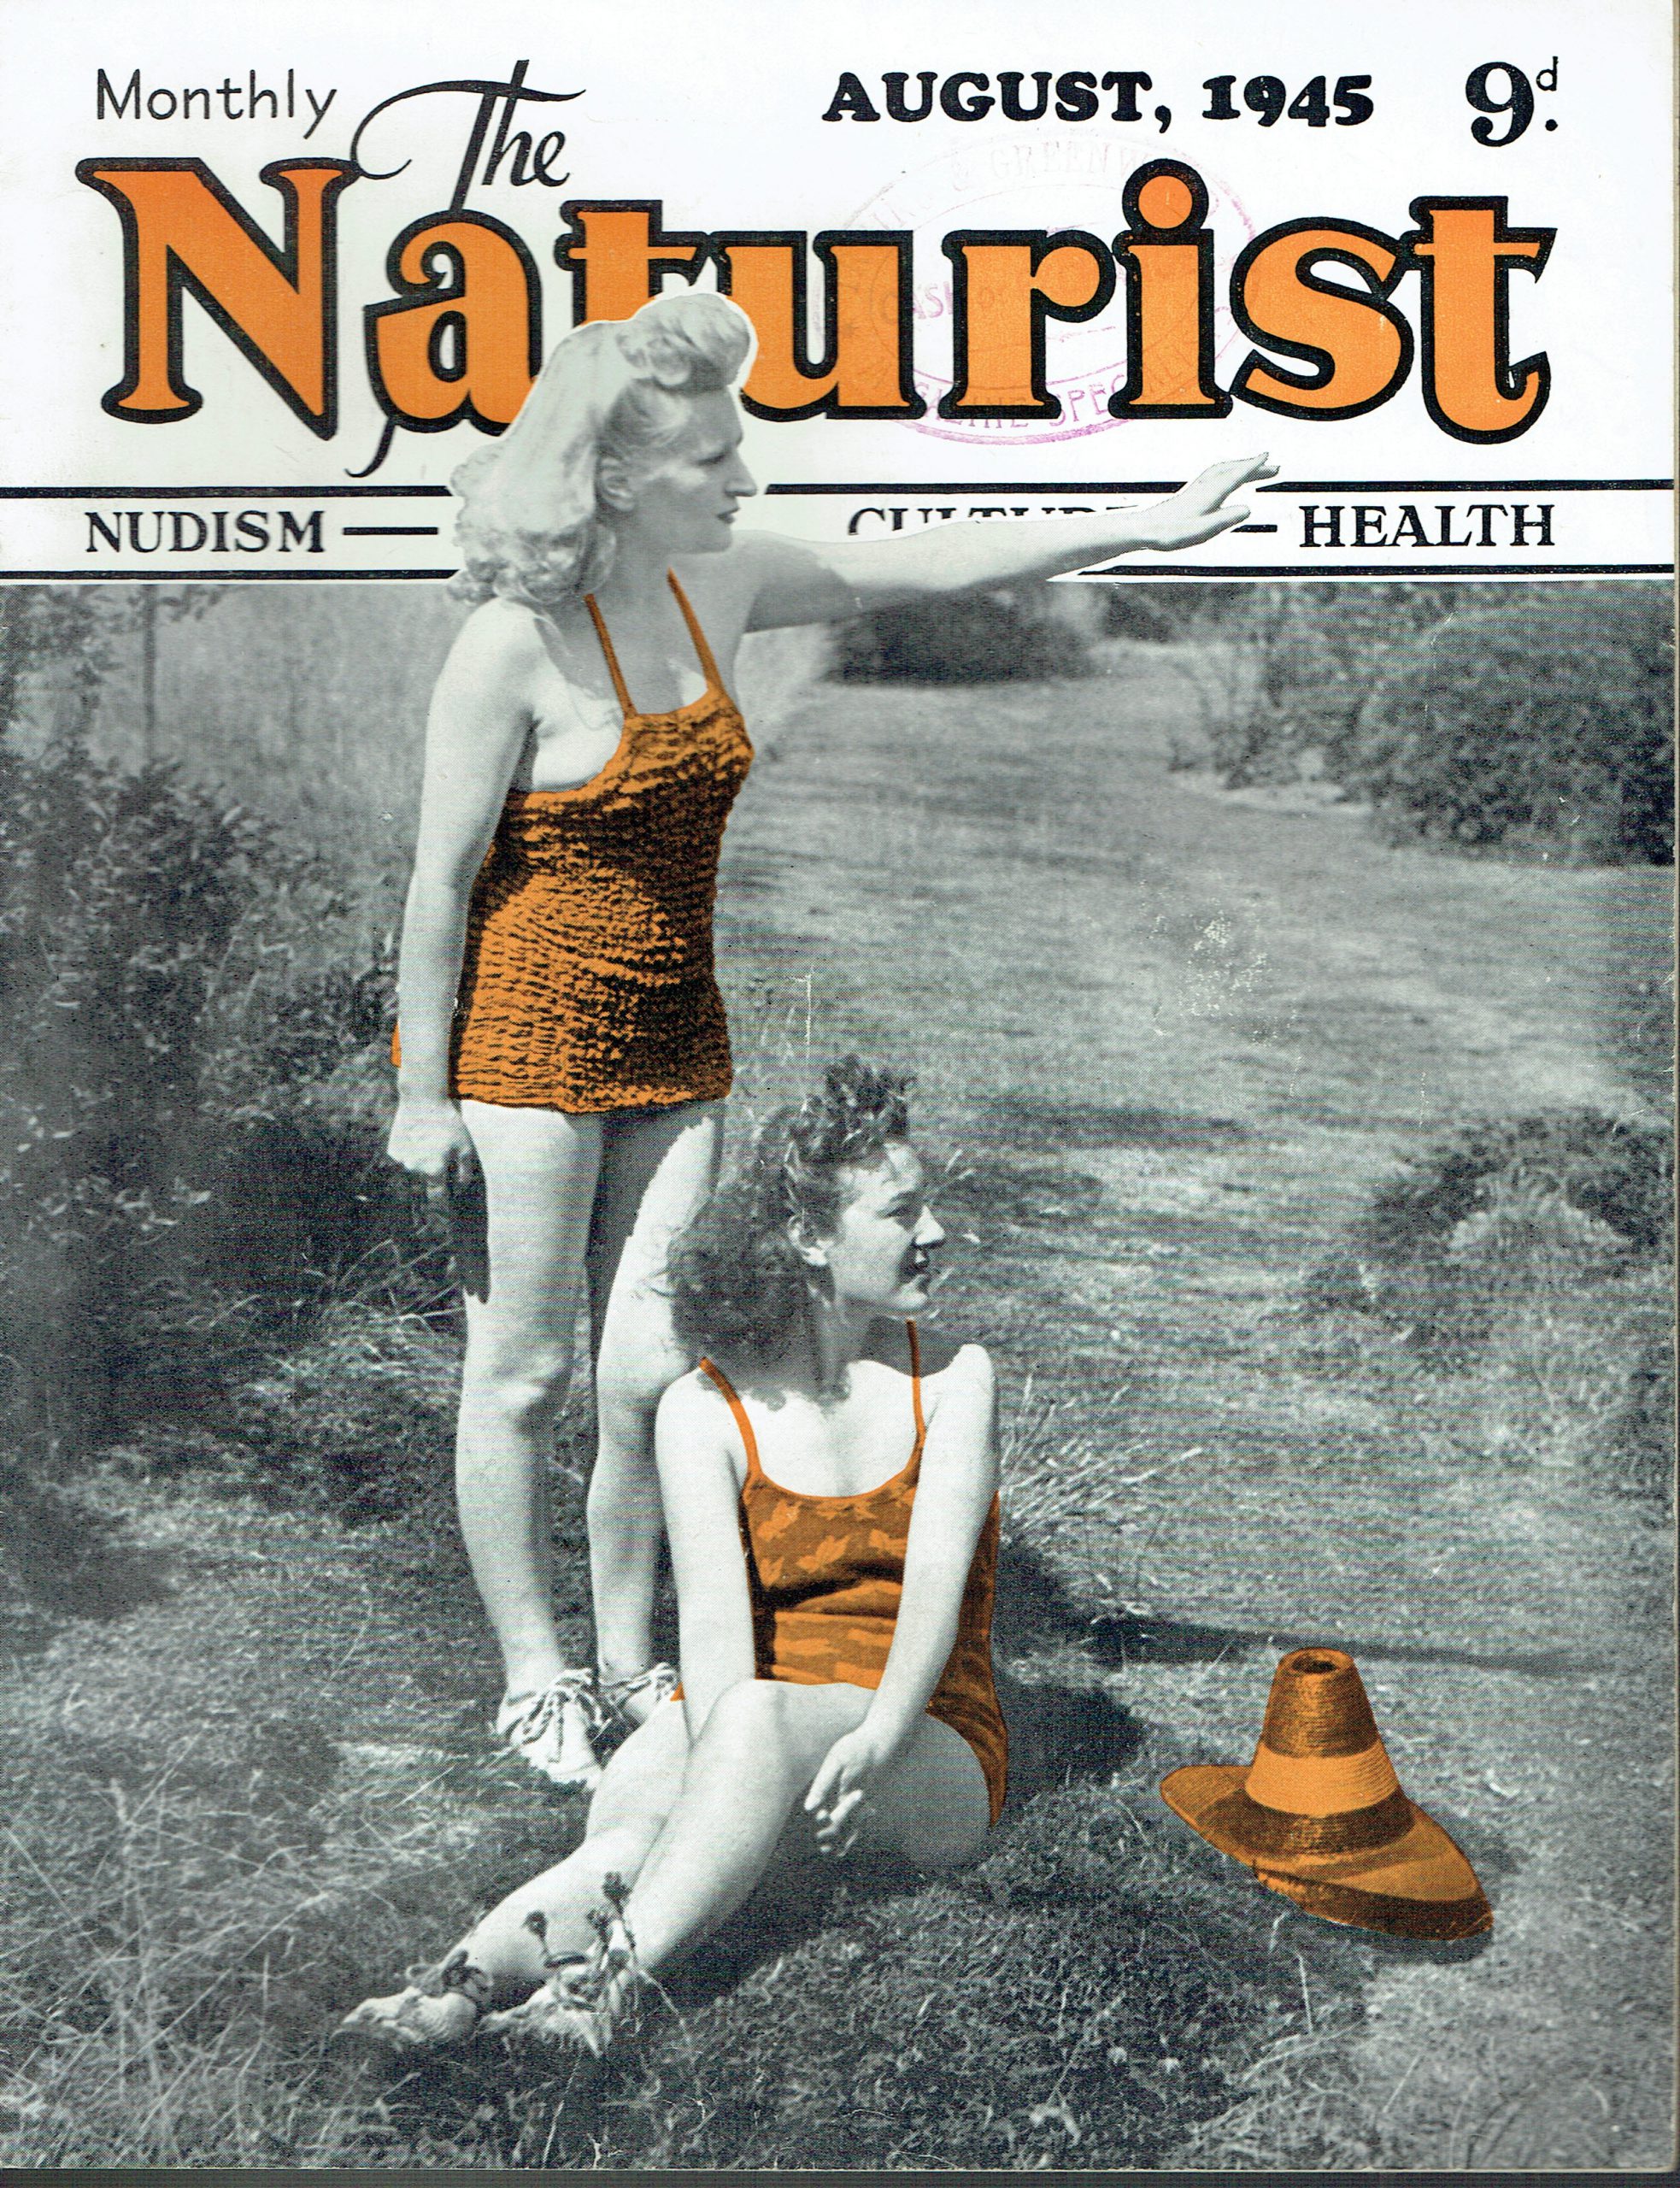 Amateur Nudism Naturism - THE NATURIST MONTHLY AUGUST 1945 NUDISM HEALTH Vintage and Modern Magazines  - Vintage Magazines